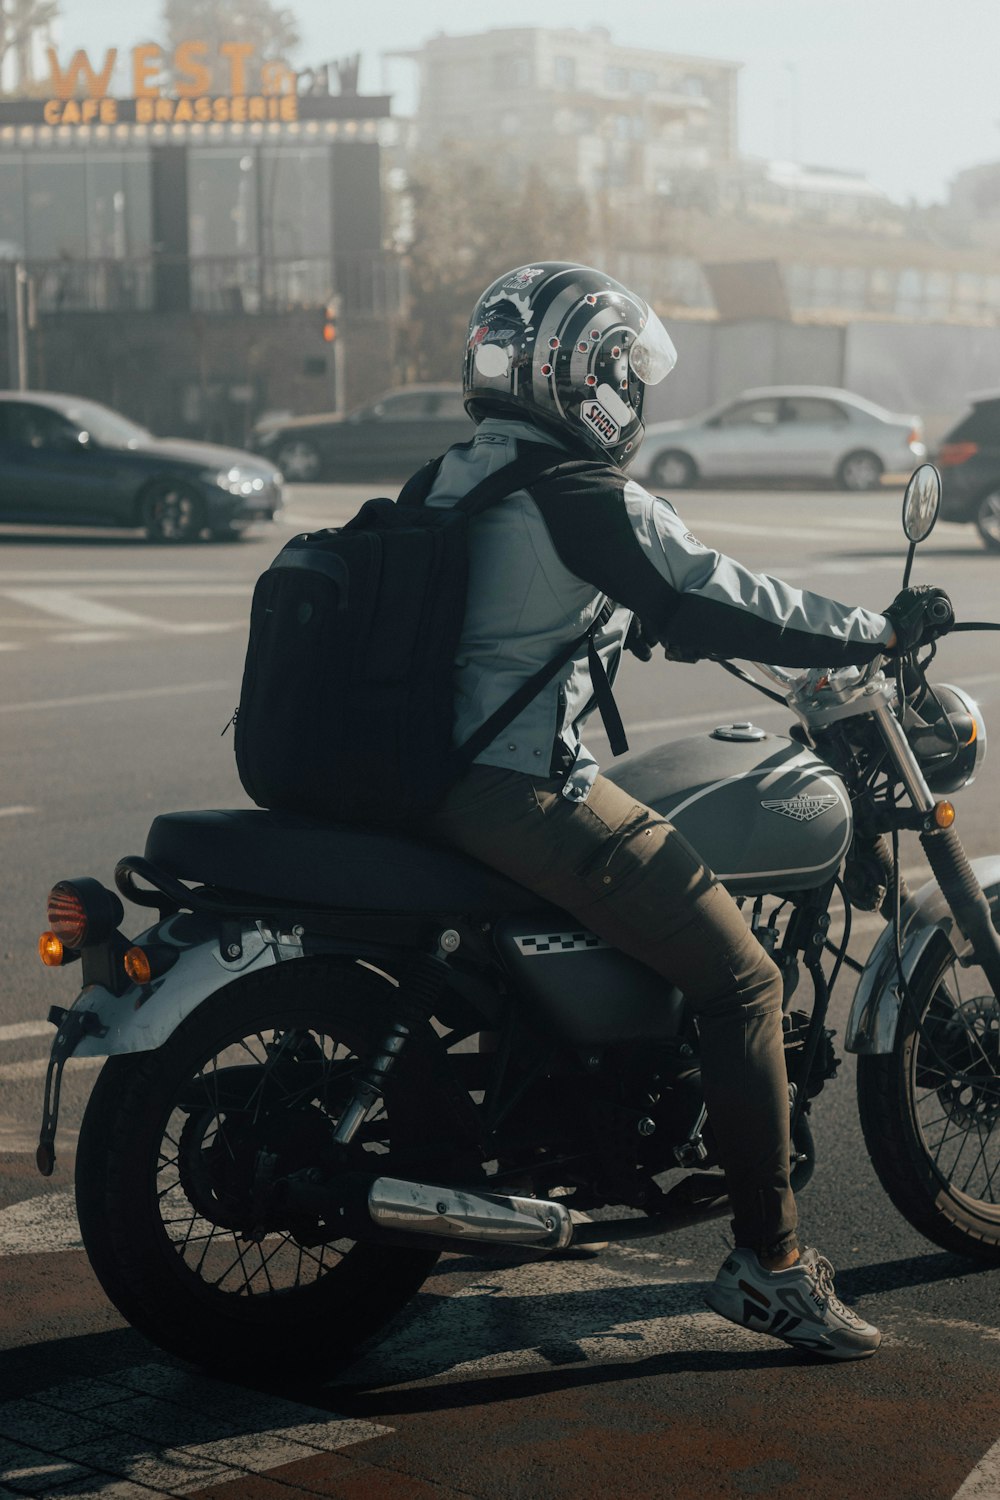 a man riding a motorcycle on a city street